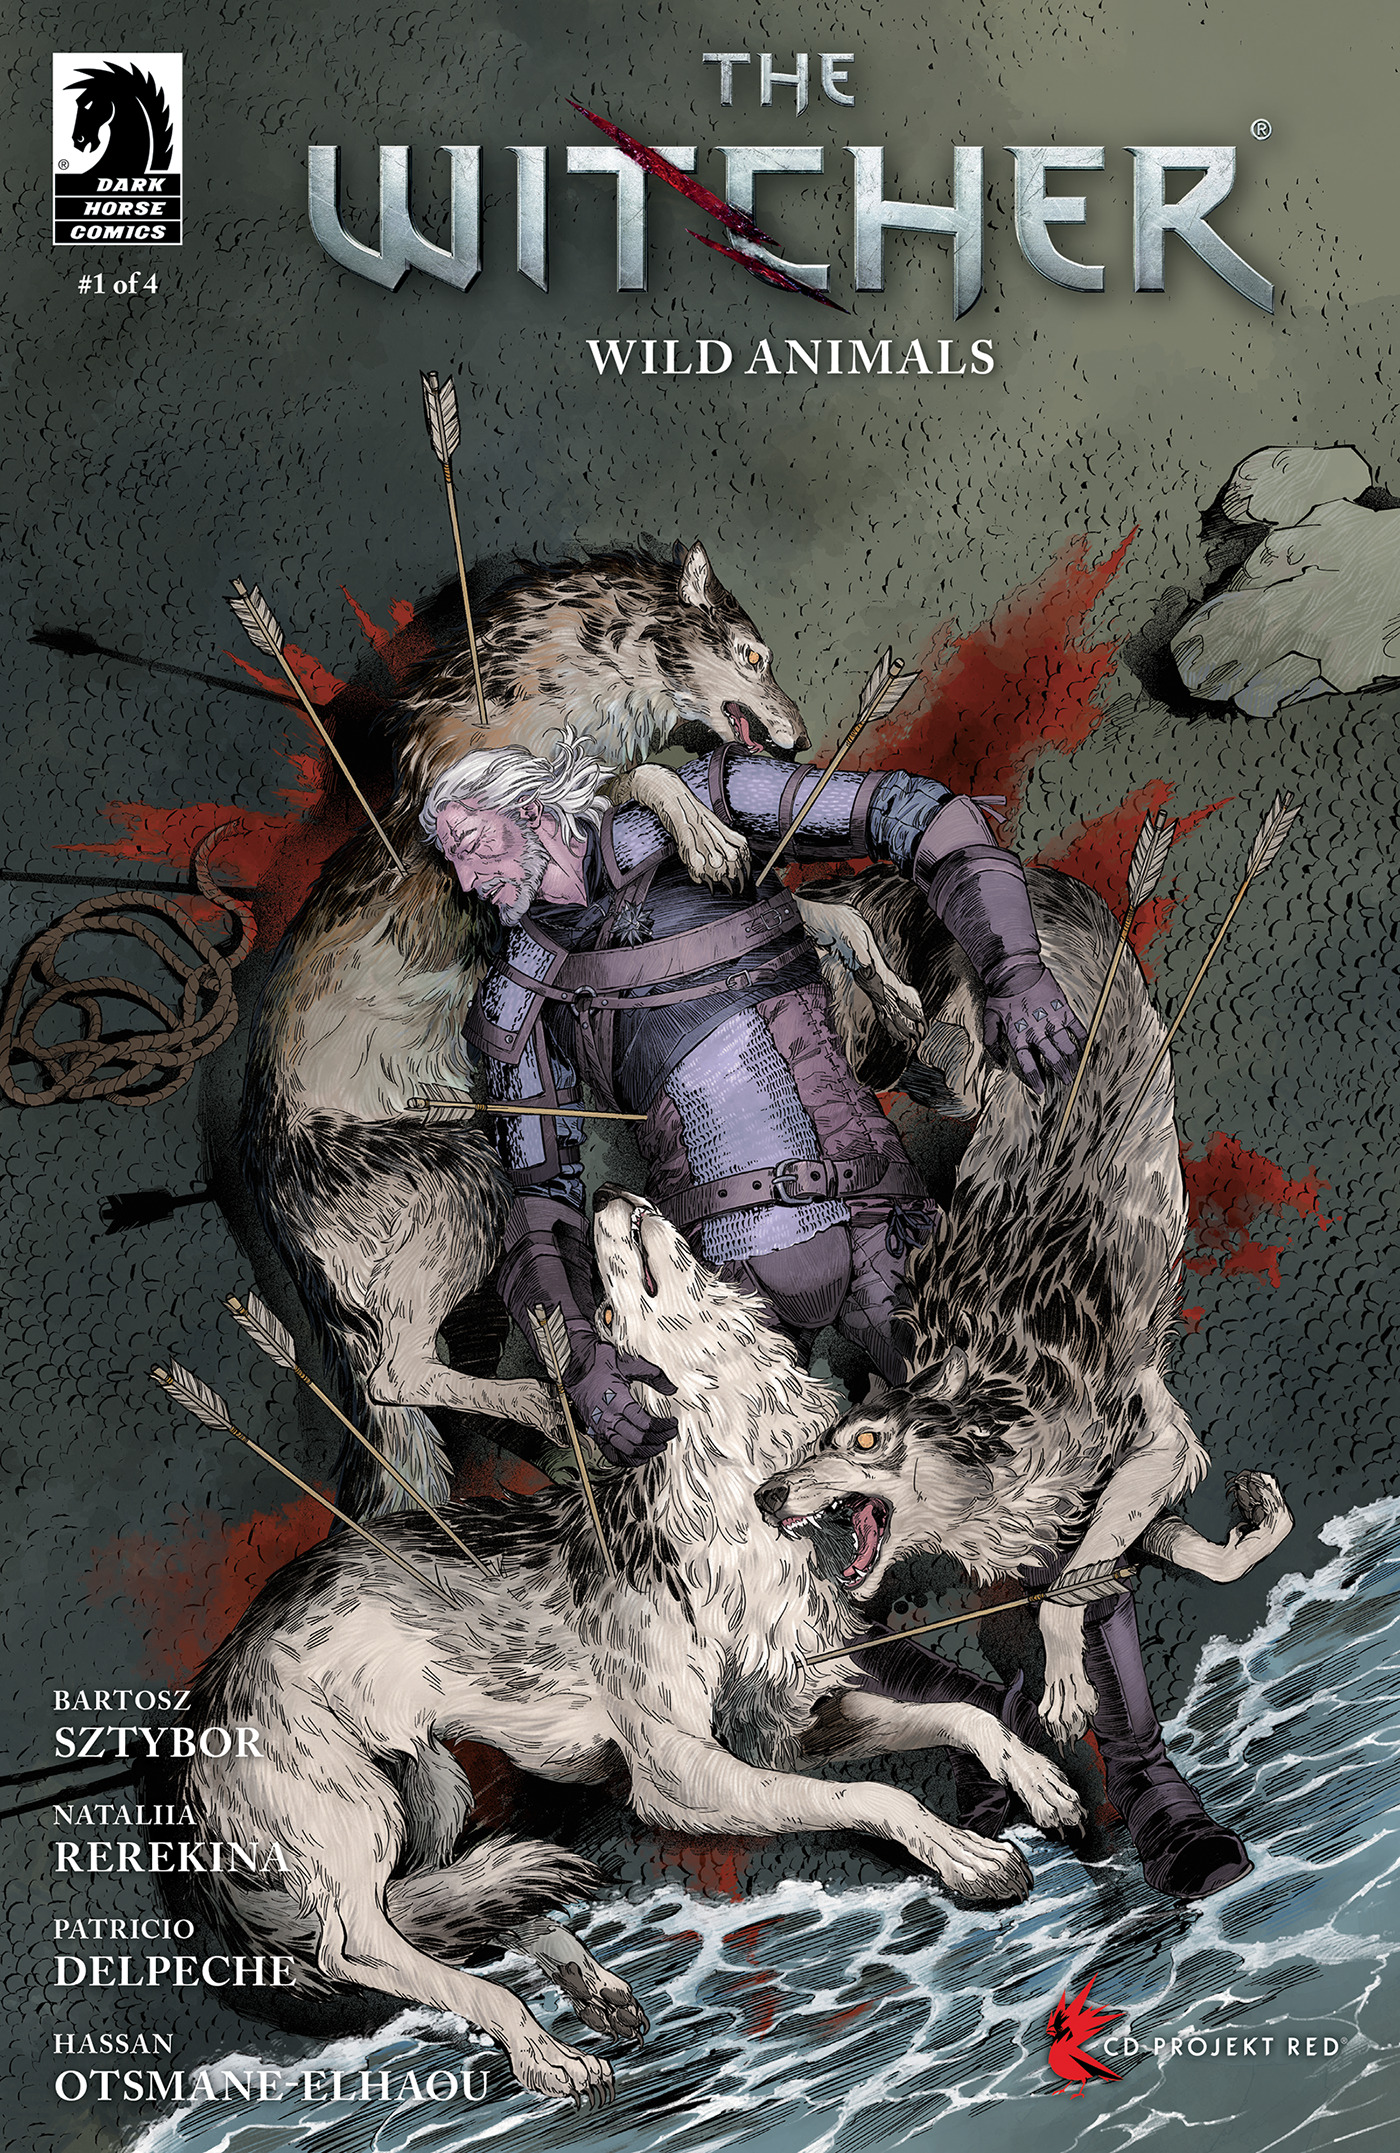 Witcher Wild Animals Issue #1 Main Cover